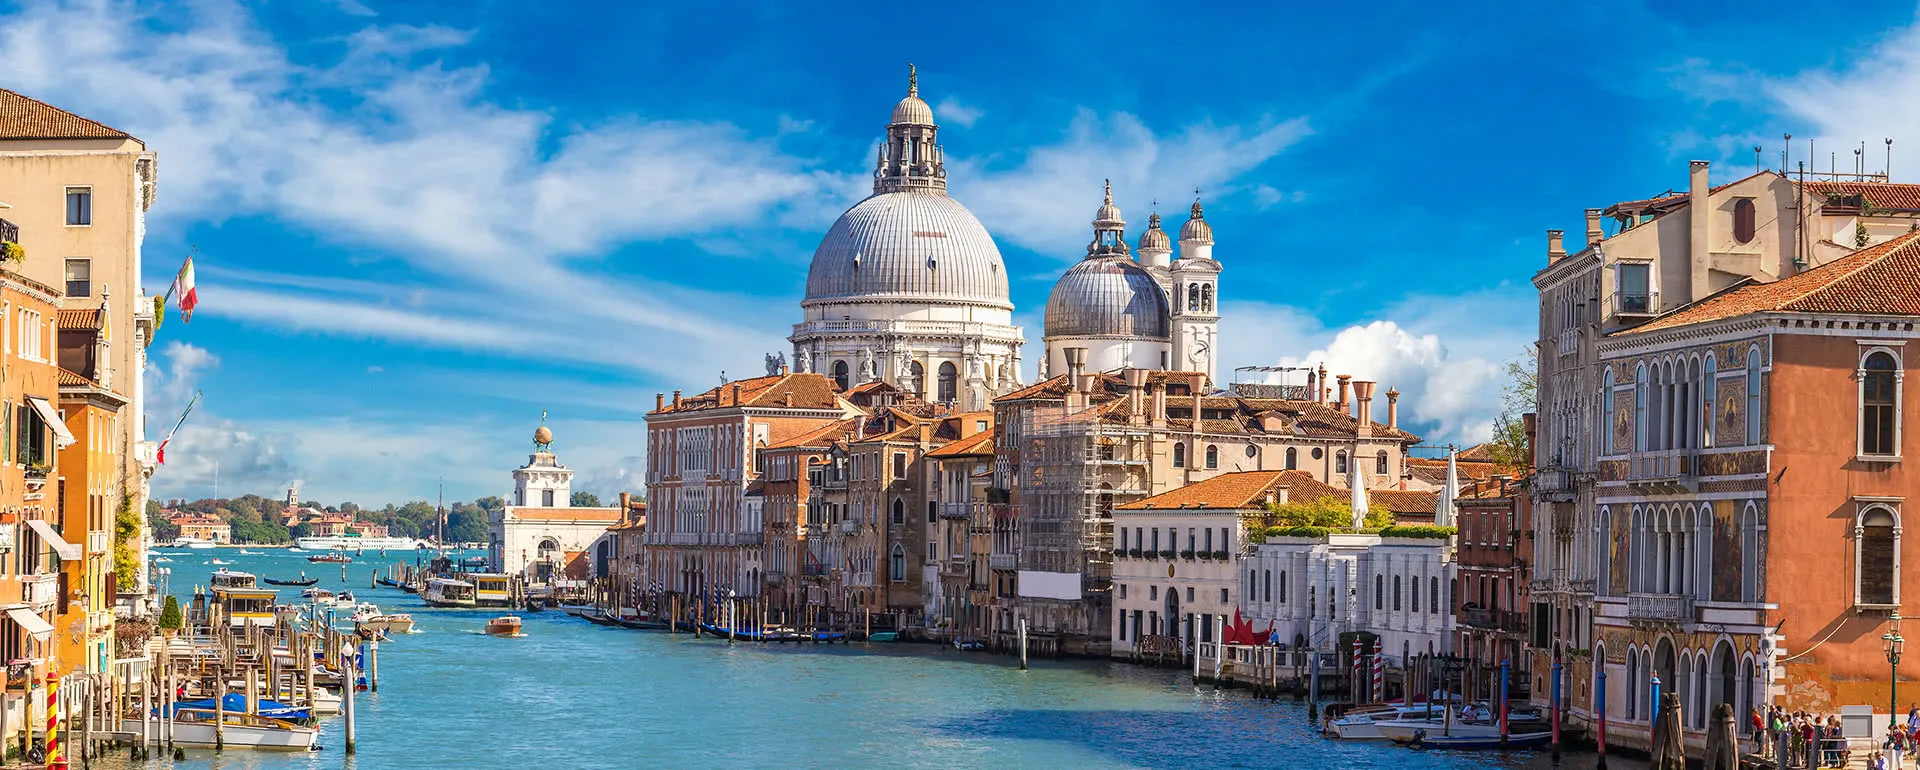 Venedig panorama image